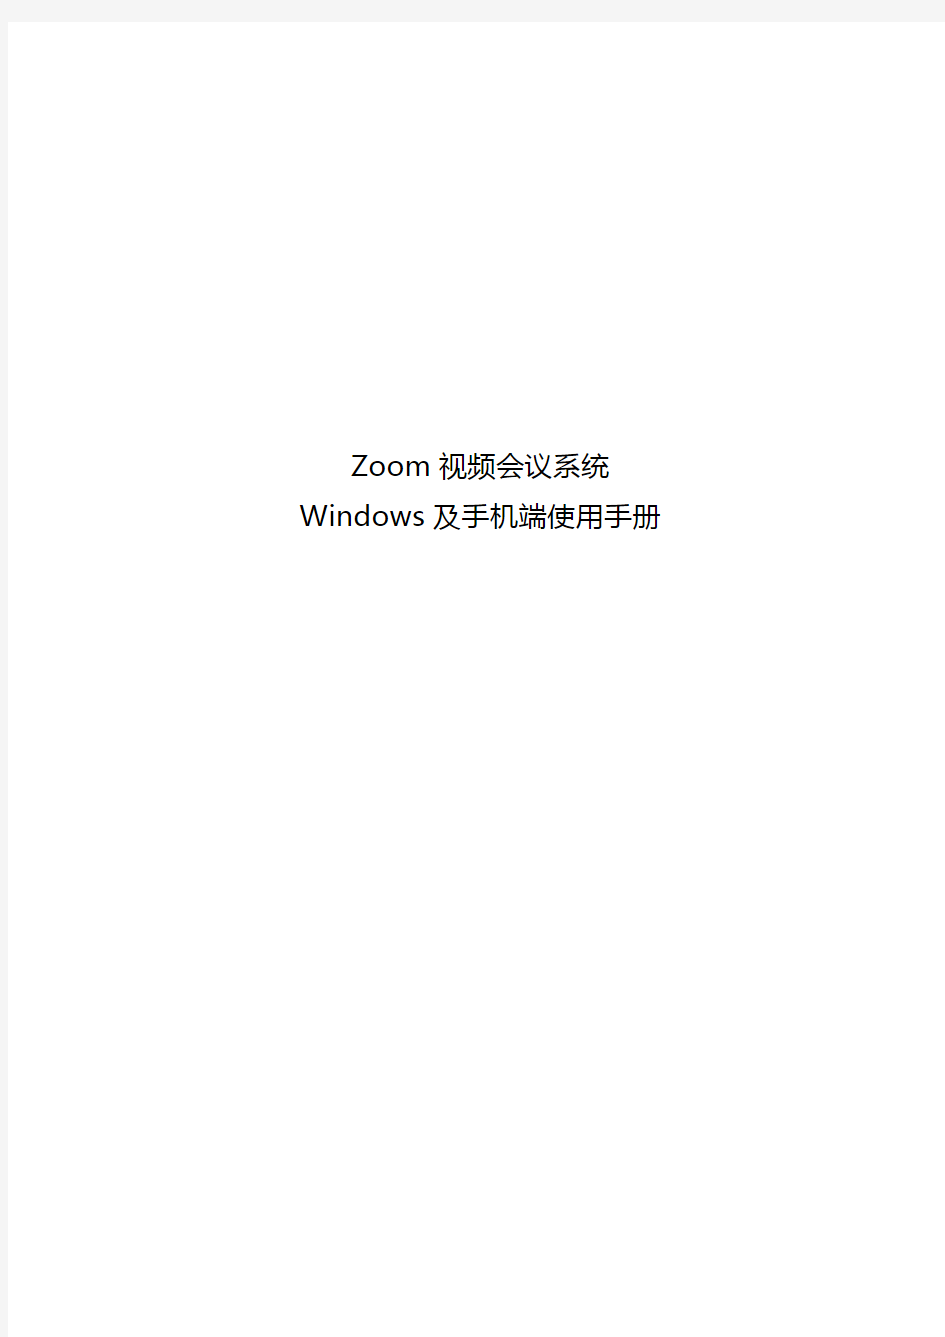 Zoom会议系统使用手册(PC端及手机端)